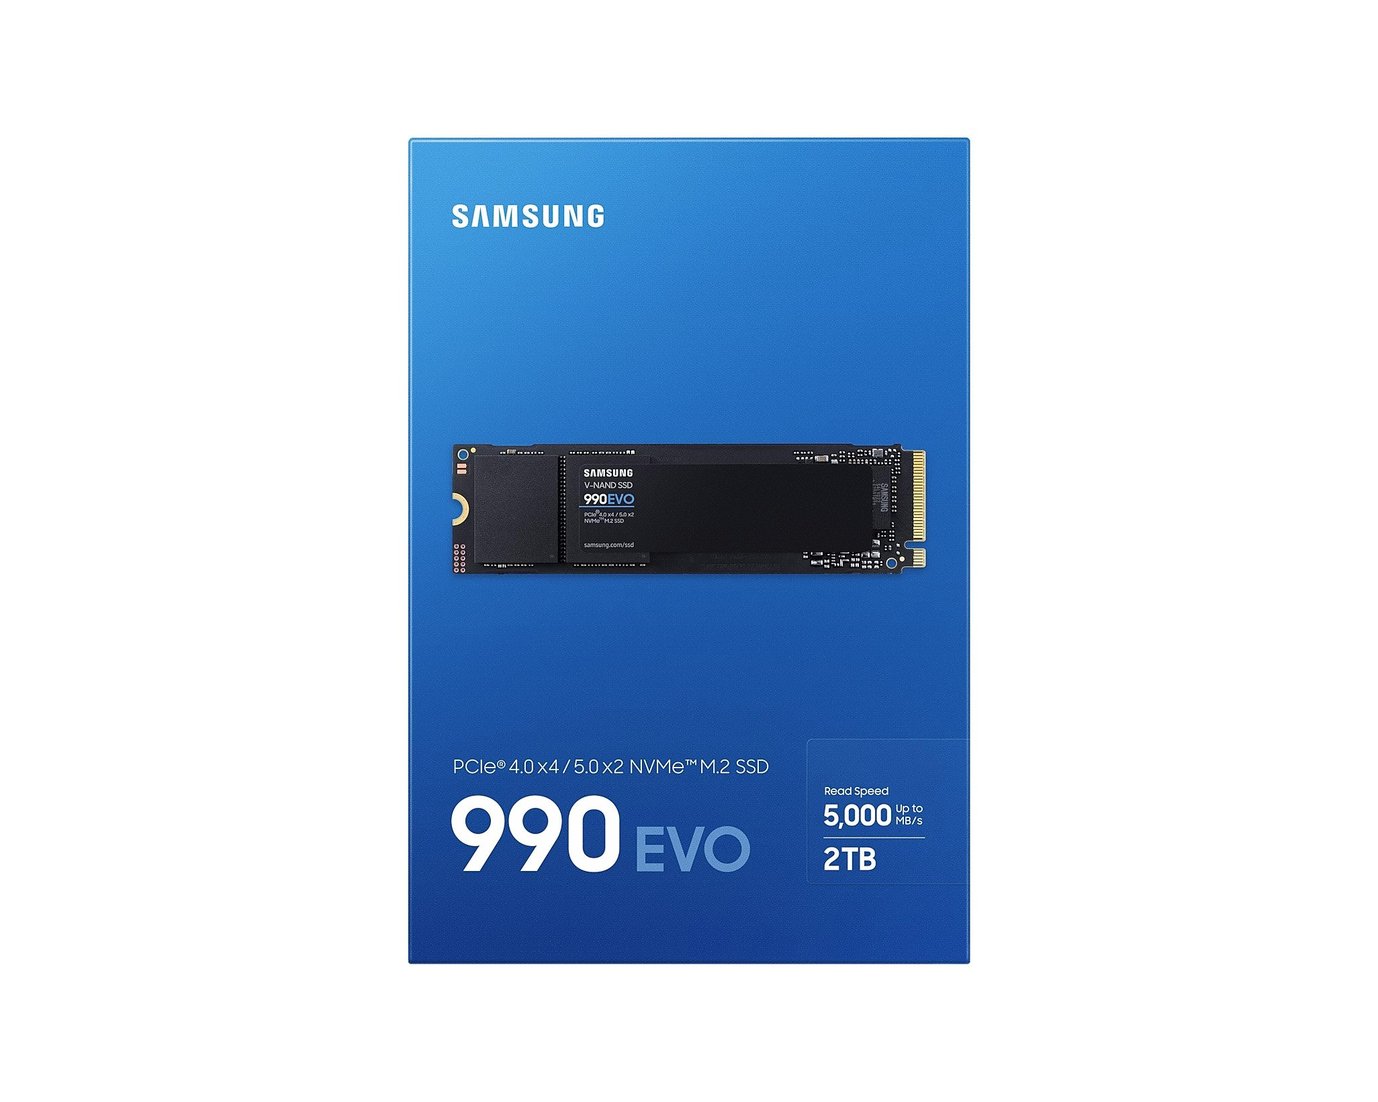 Samsung-SSD-990-EVO-1704588182-0-0.jpg